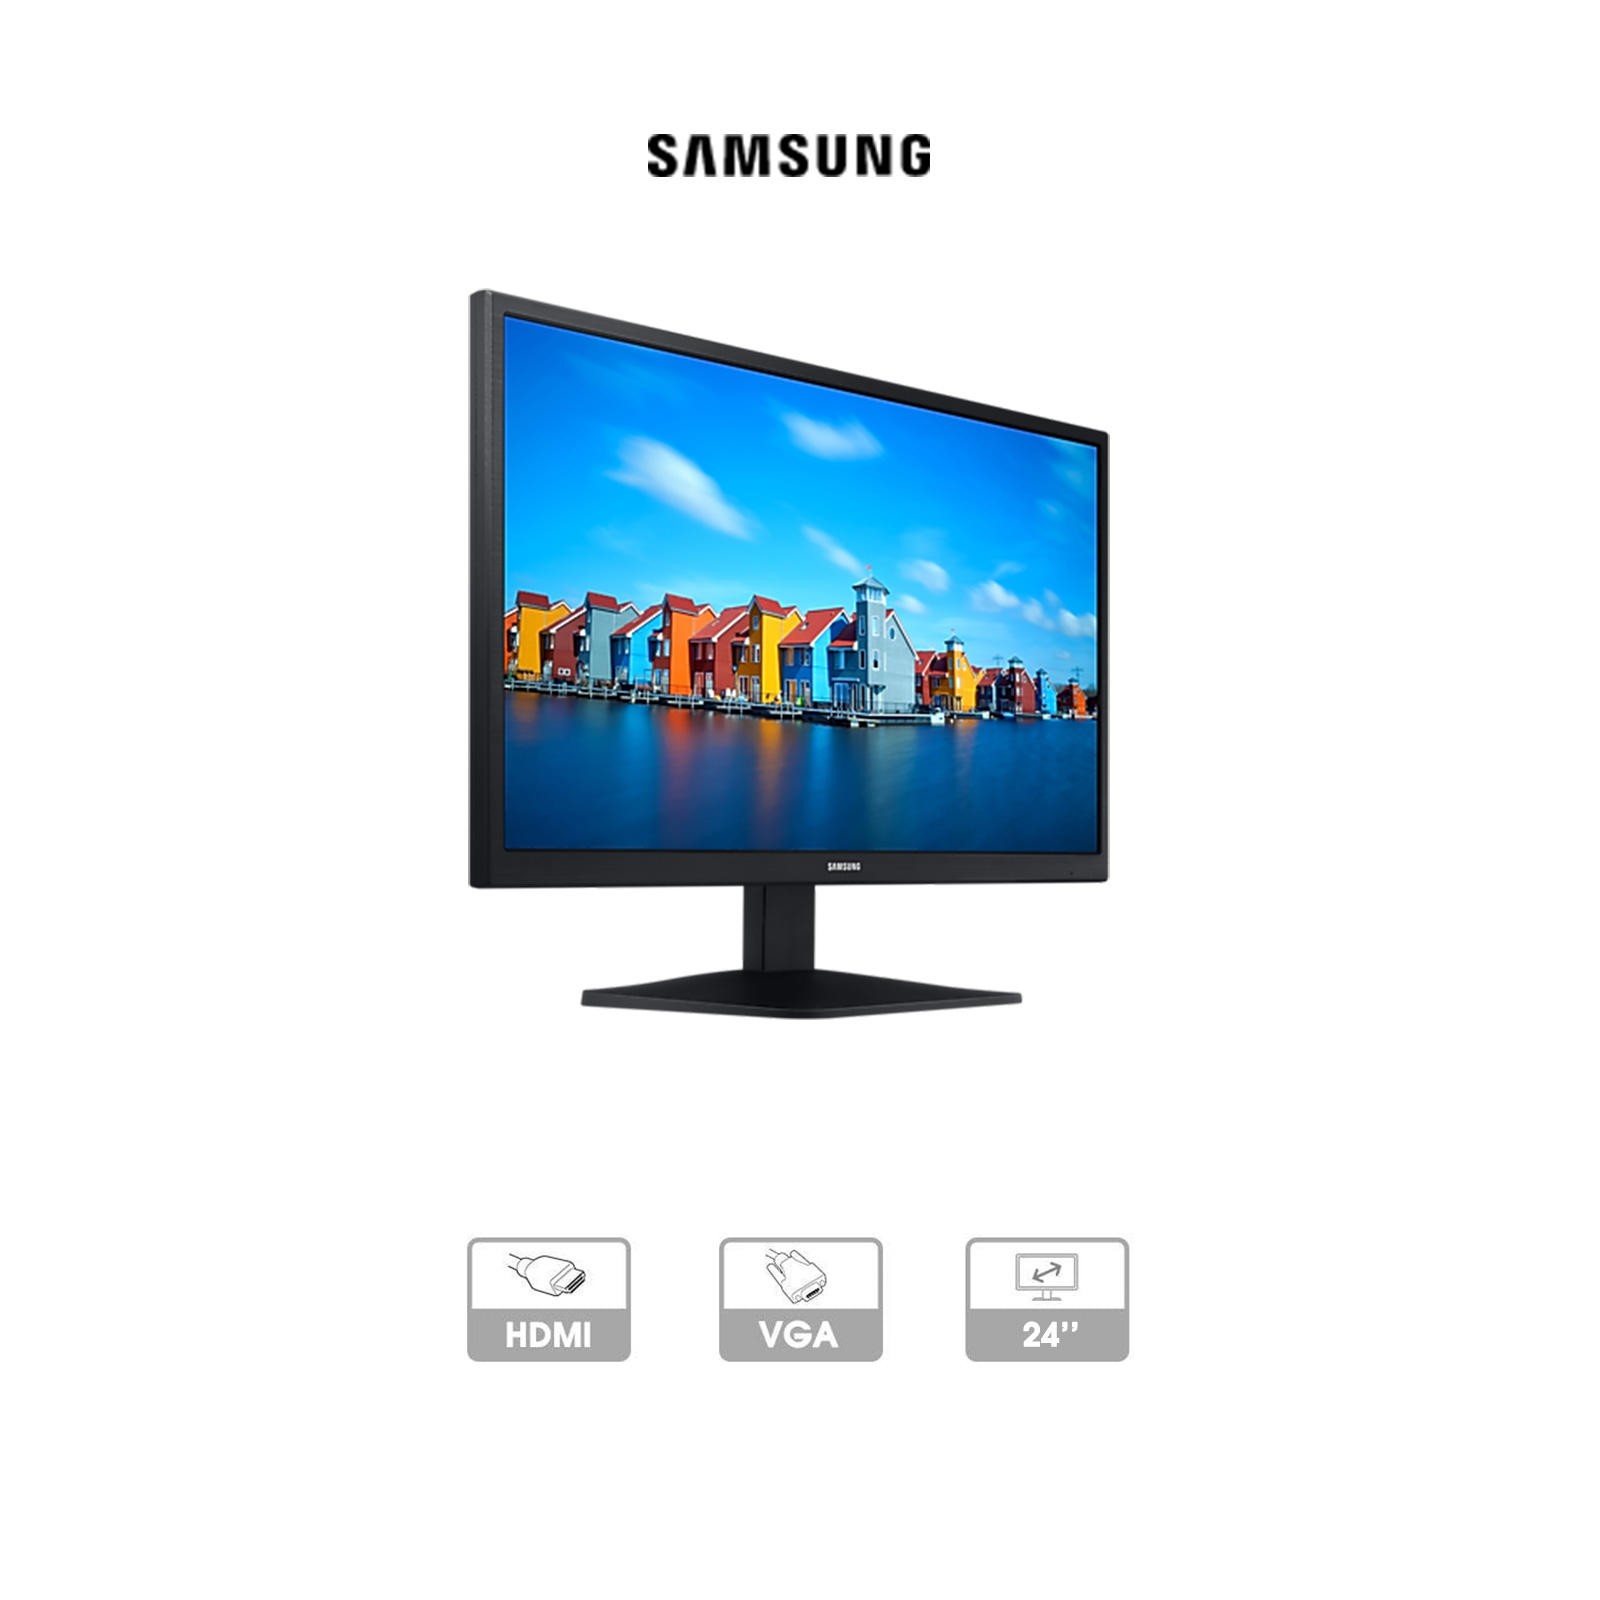 Ecran de vidéosurveillance Samsung, 24 pouces, Full HD